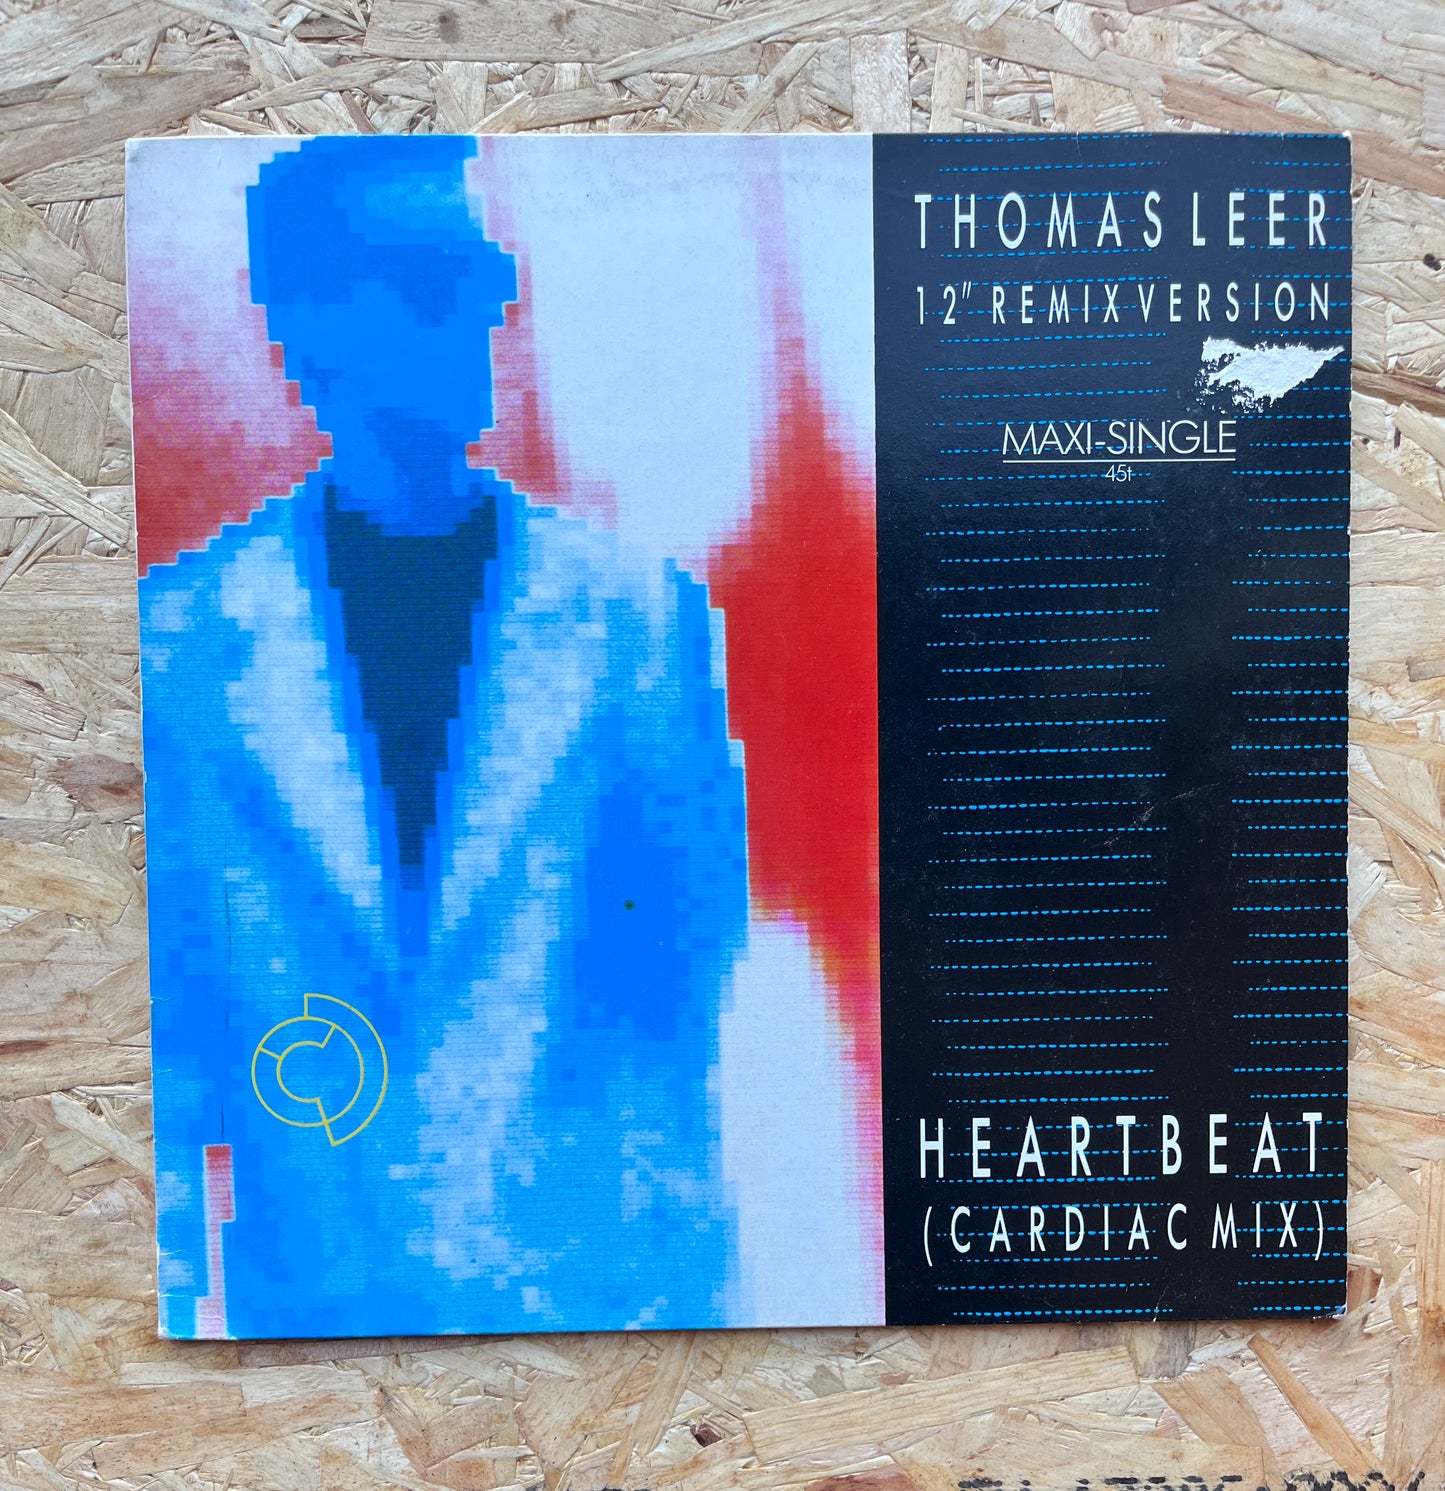 Thomas Leer – Heartbeat (Cardiac Mix) (12" Remix Version)